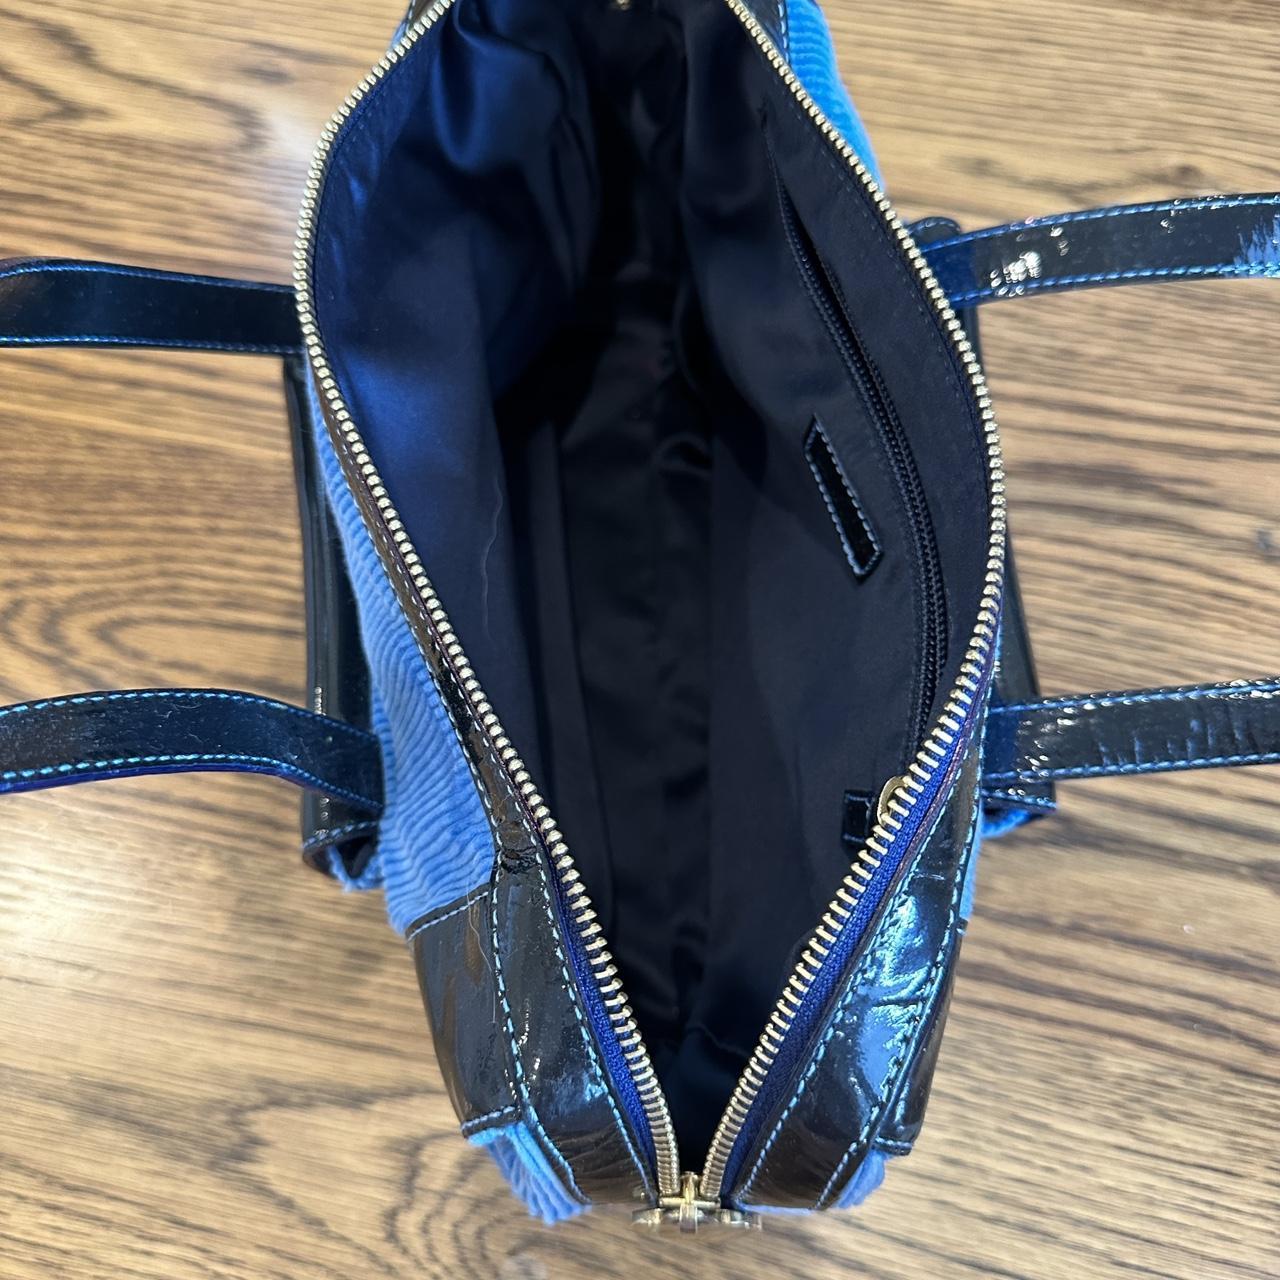 Moschino Cheap & Chic Women's Blue and Black Bag (5)